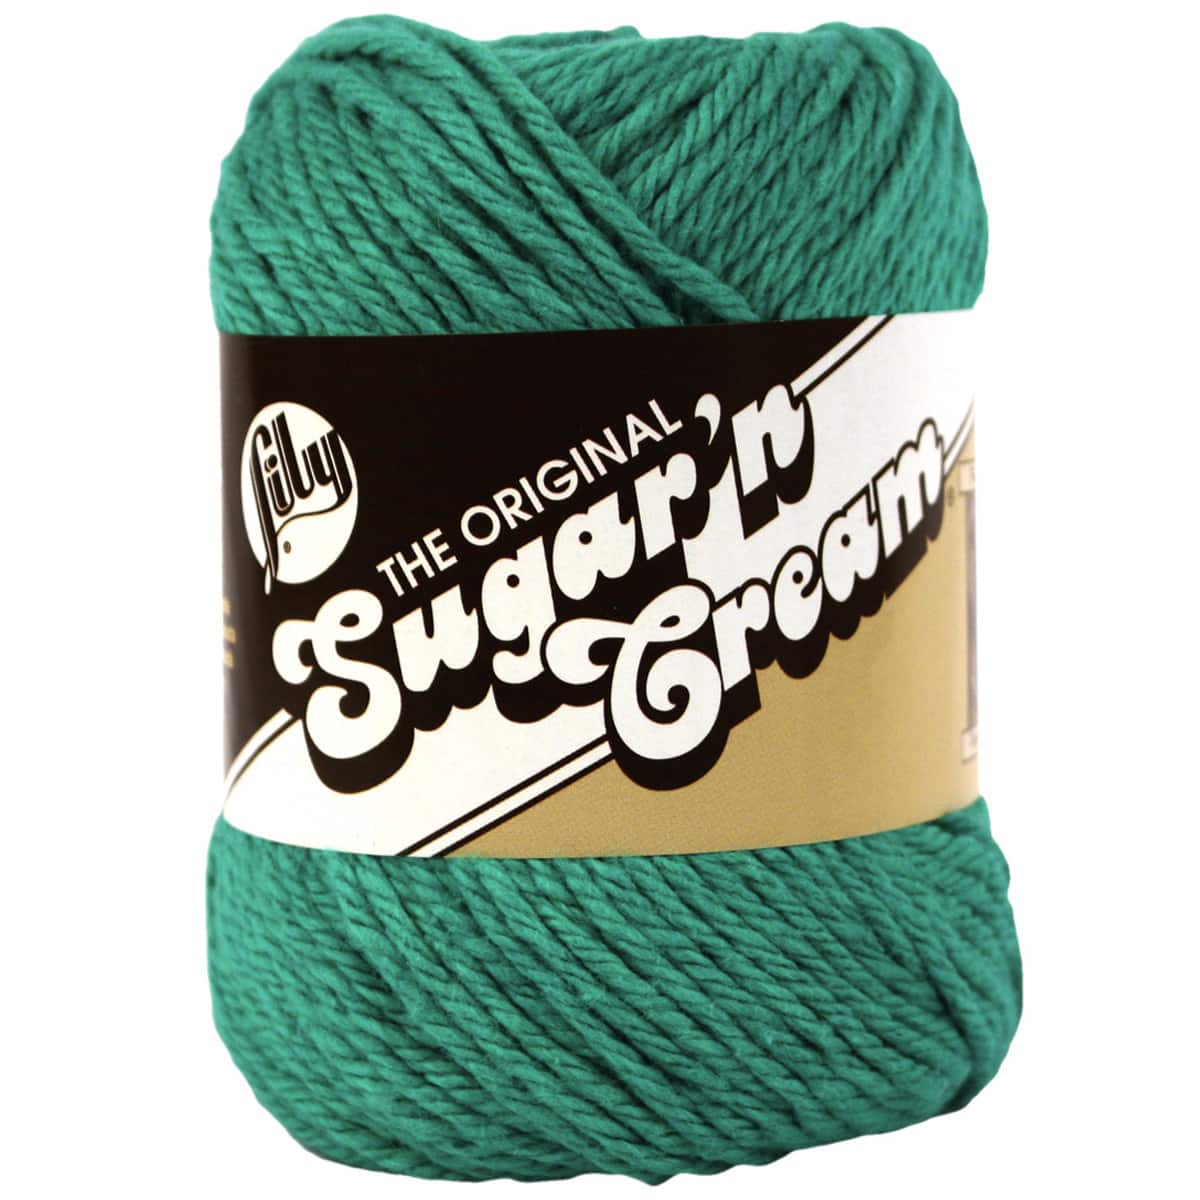 Buy Sugar 'N Cream Cotton Yarn Cone - White at S&S Worldwide